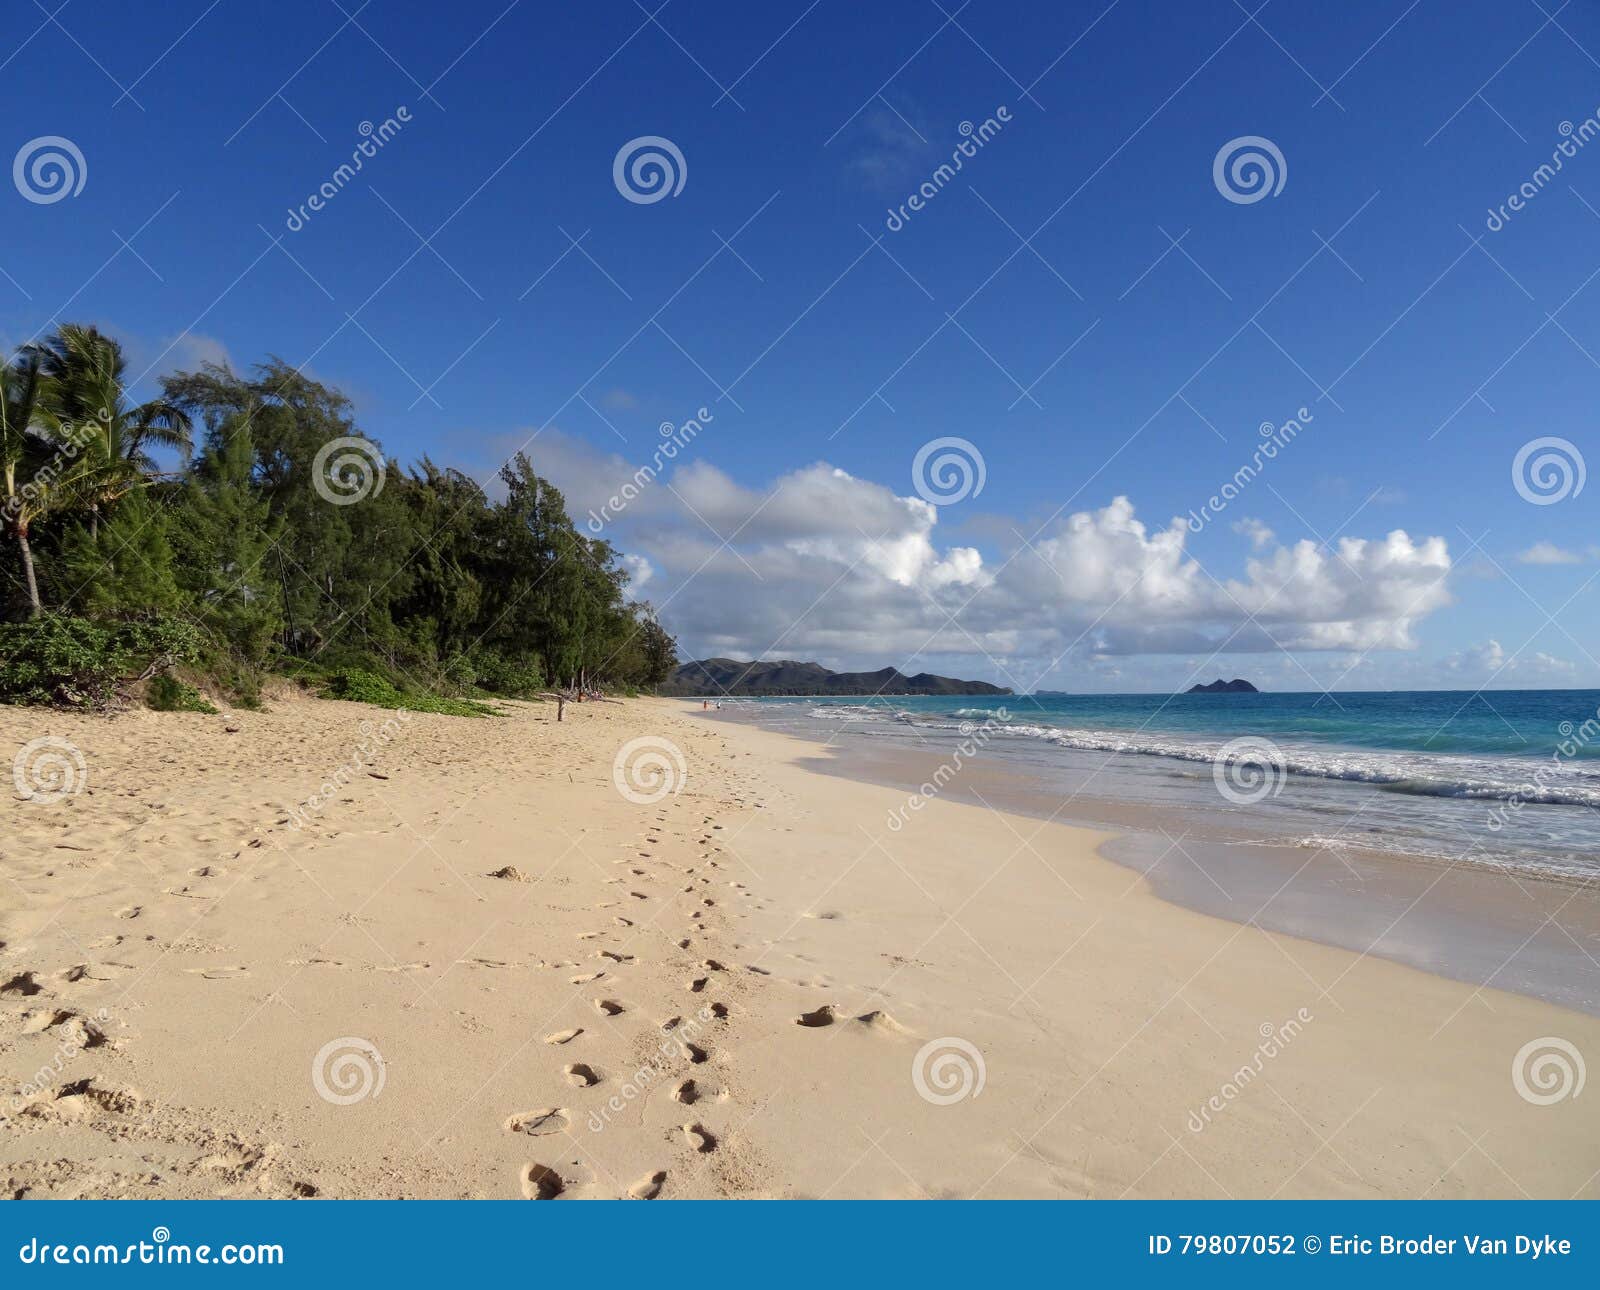 foot prints path in the sand on waimanalo beach